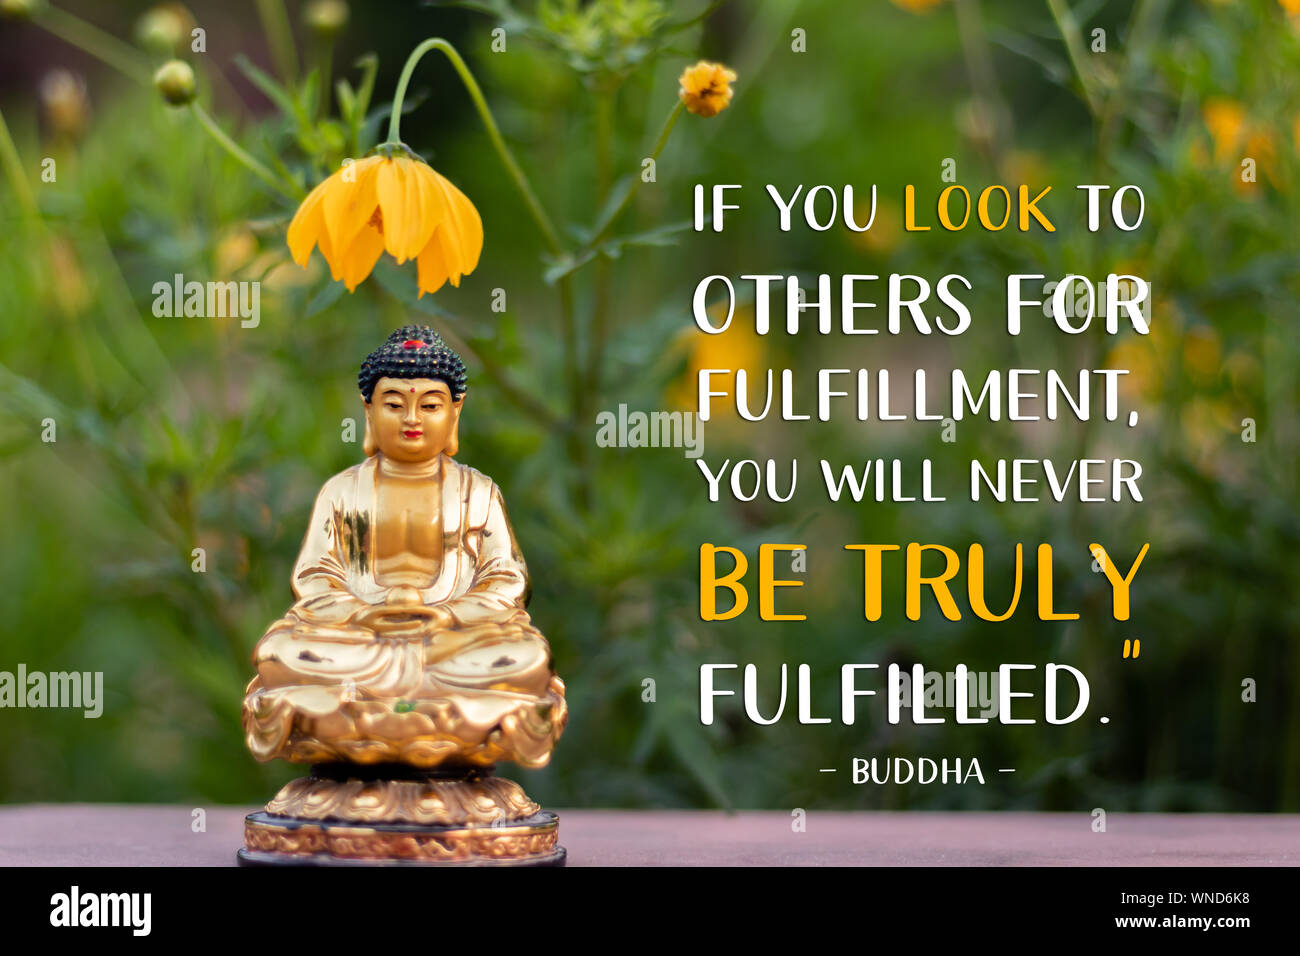 karma buddhism quotes